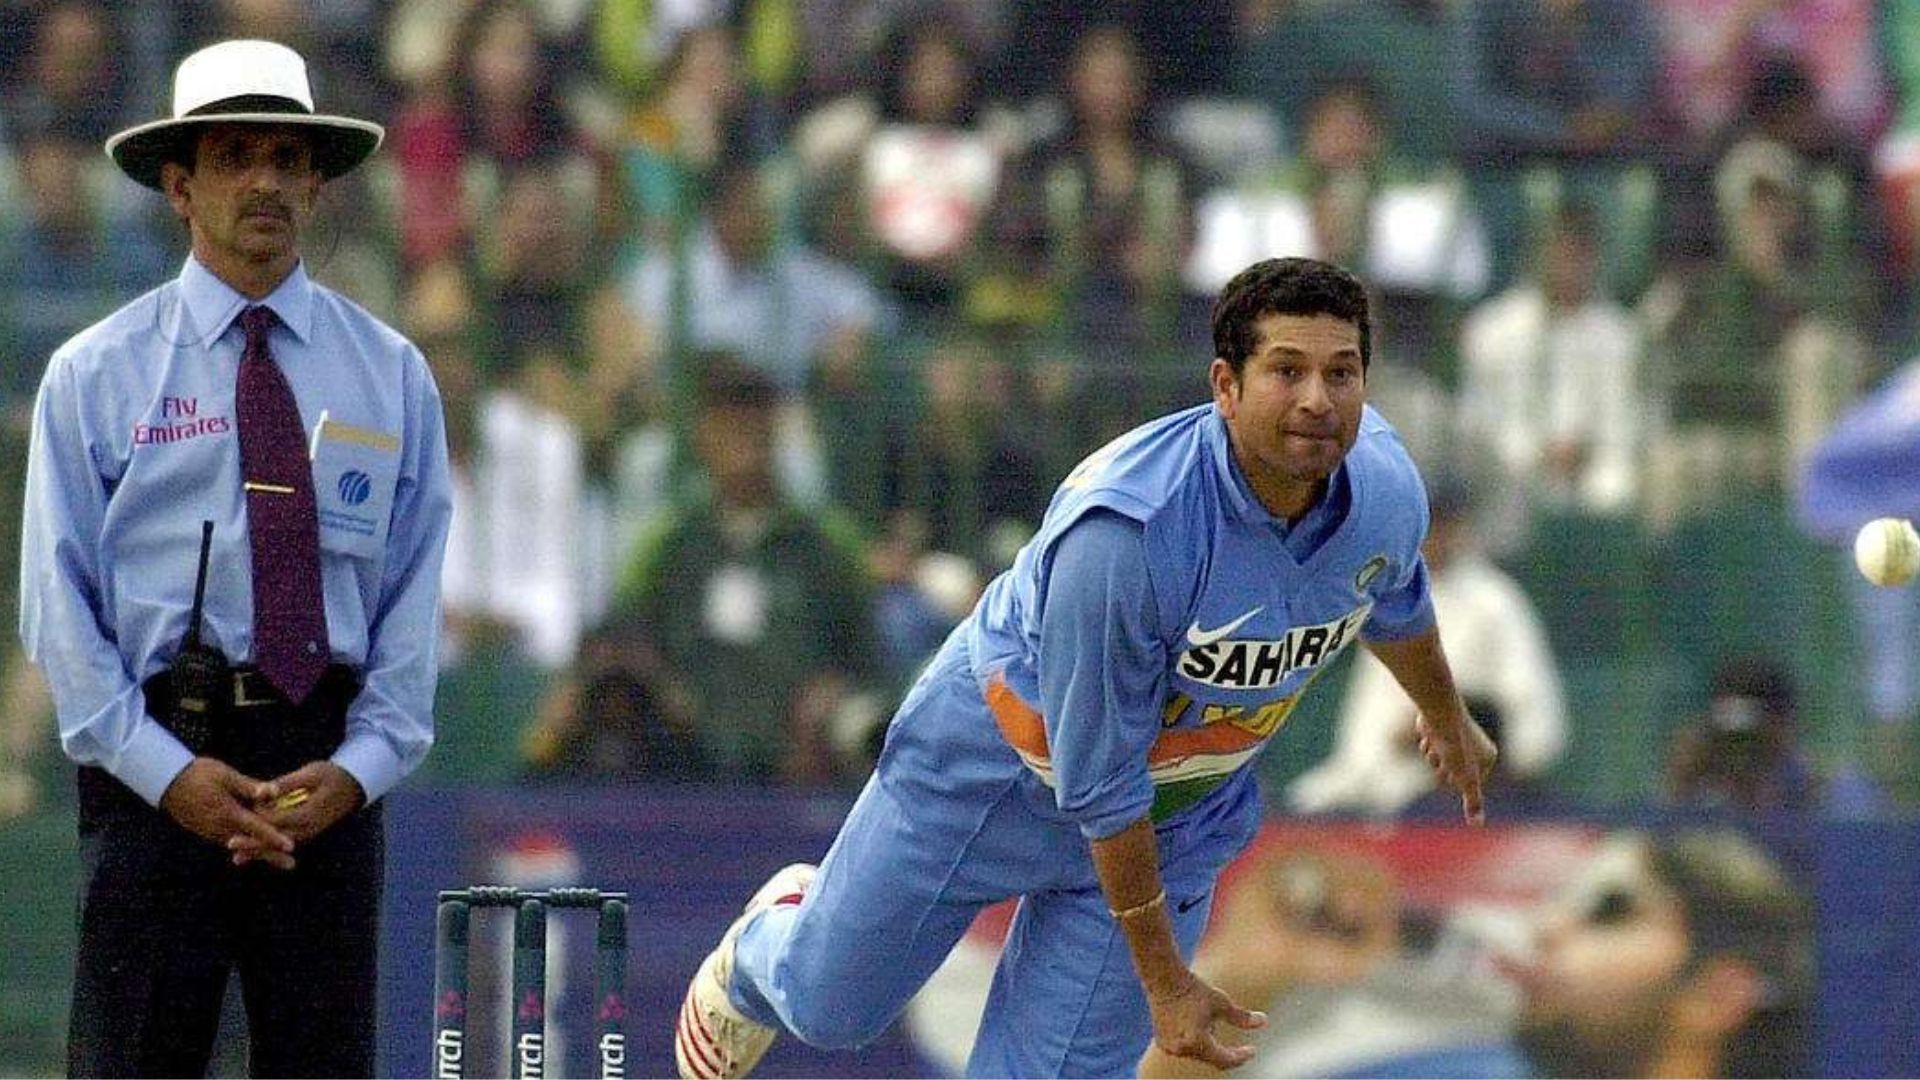 Sachin Tendulkar took 154 ODI wickets and 46 Test wickets. 